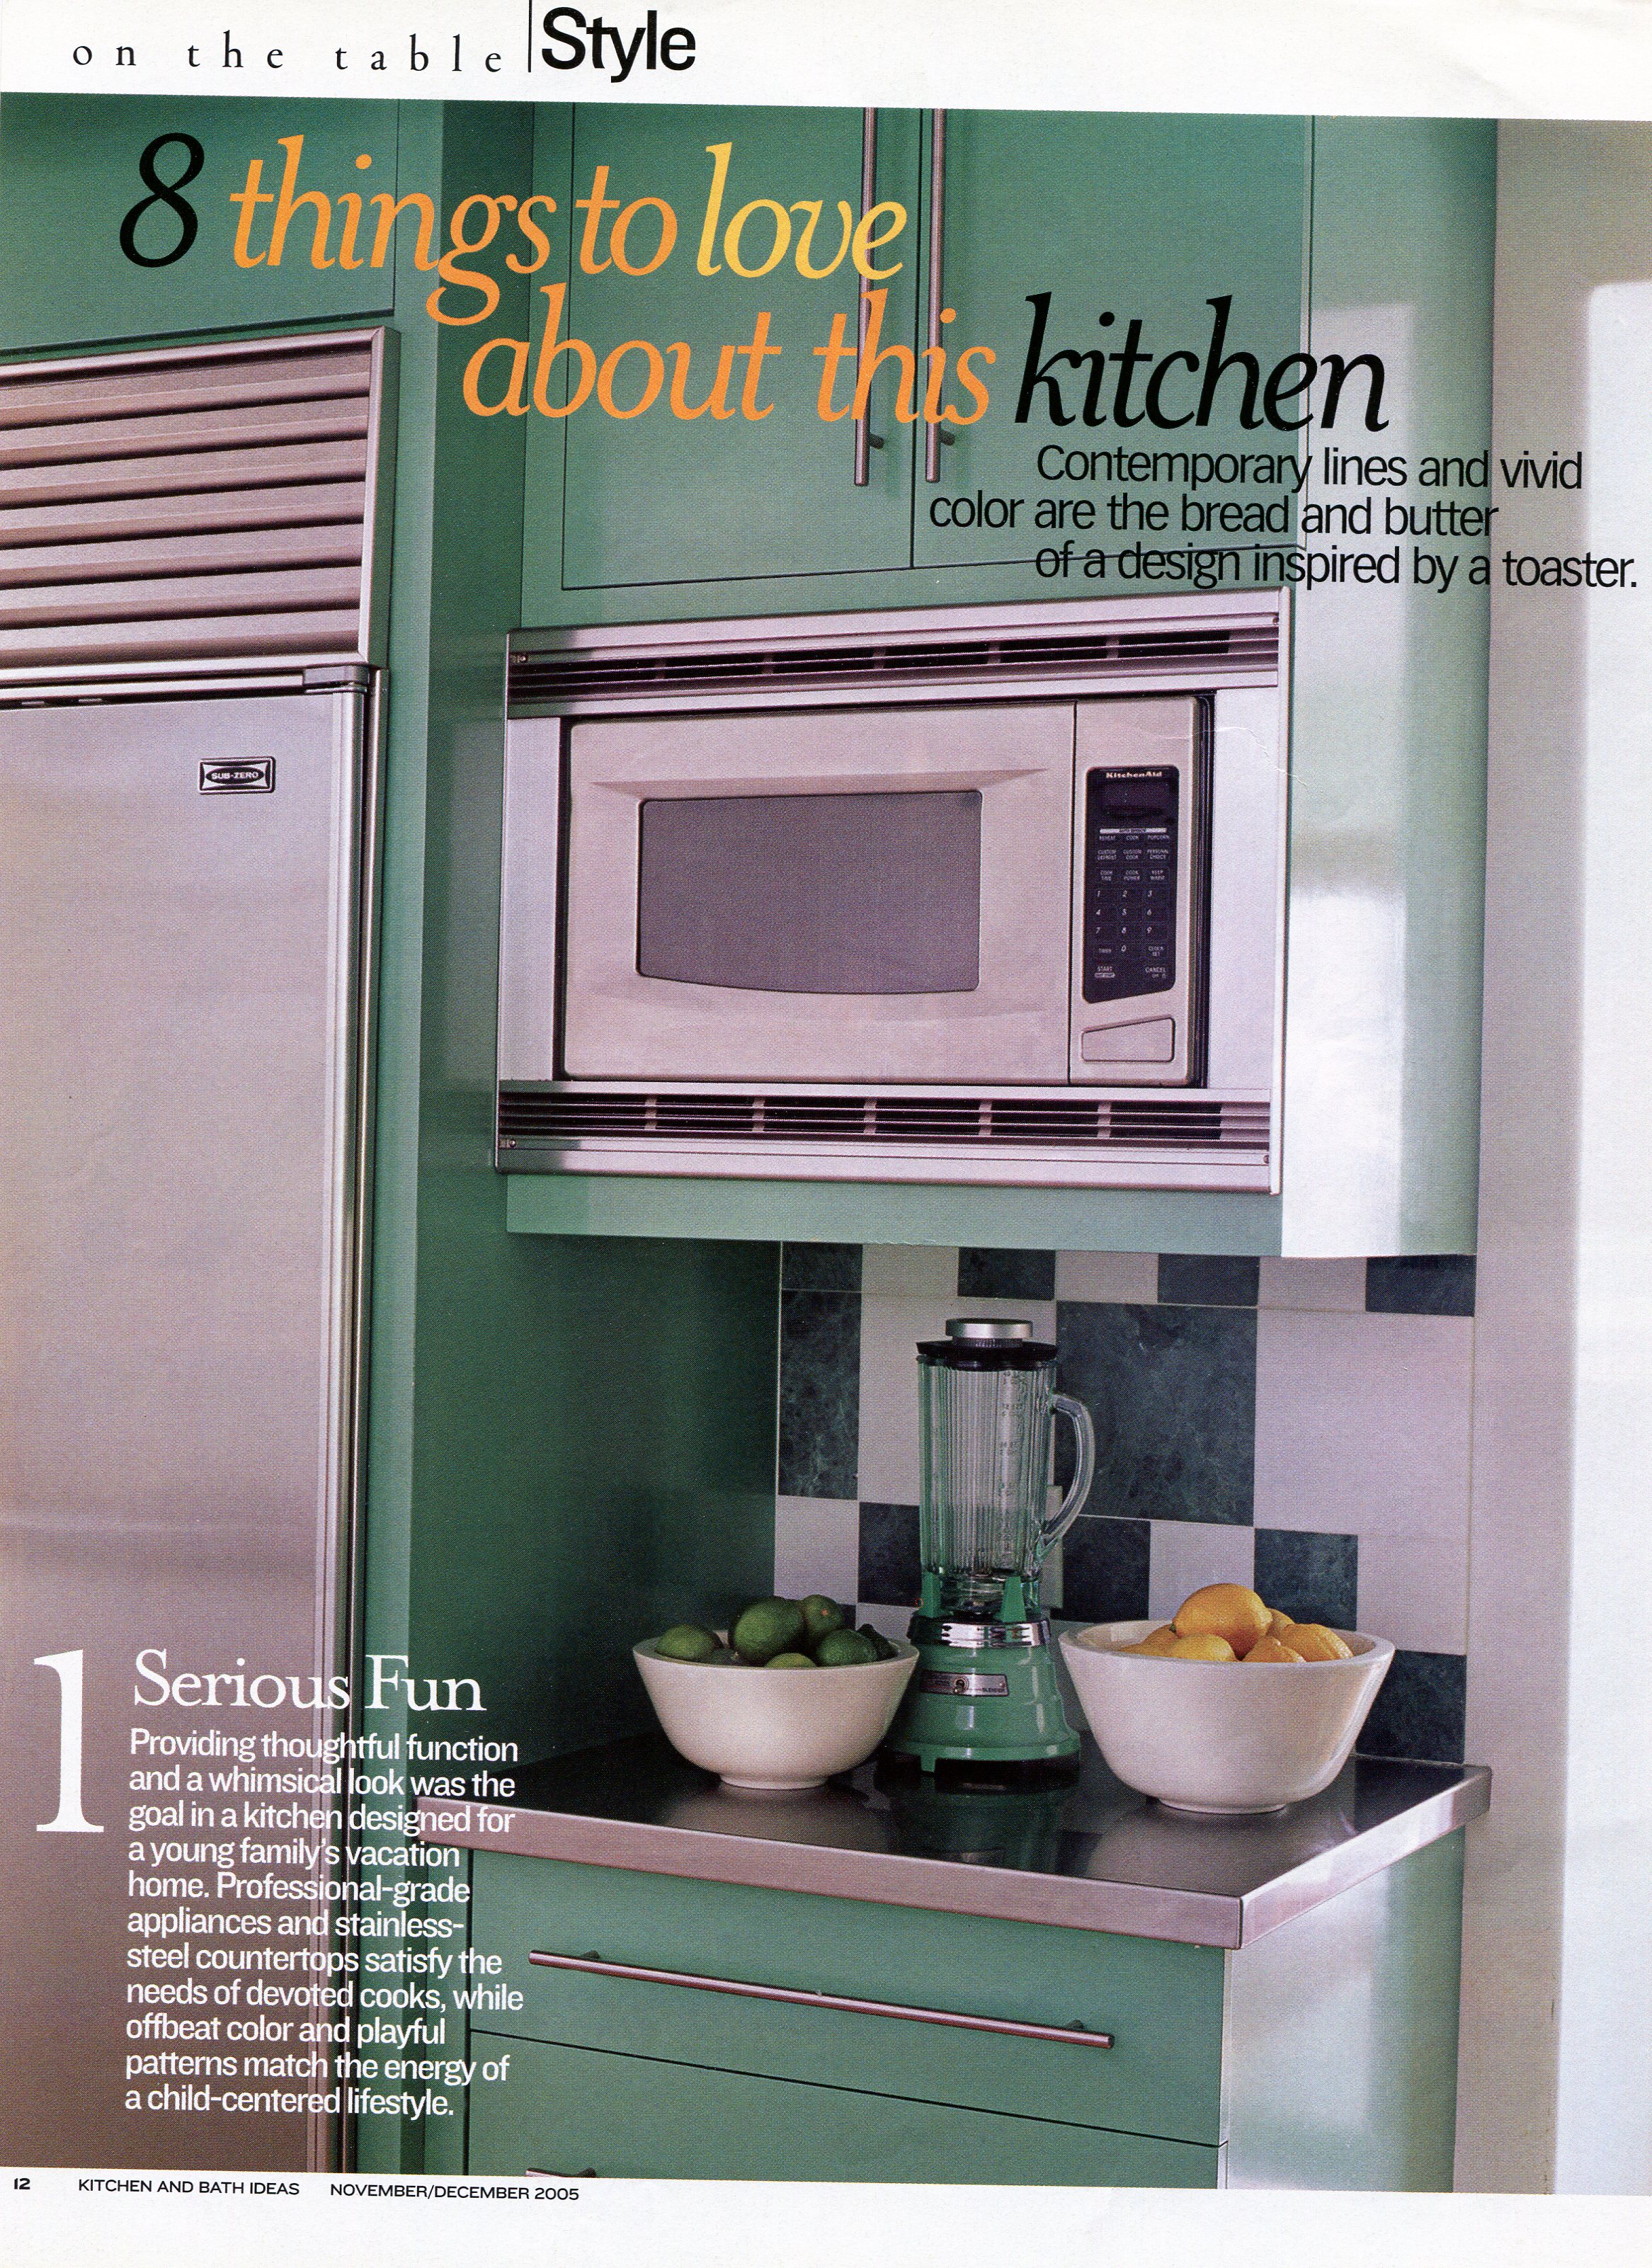 Kitchen And Ideas Nov-Dec 2005_1